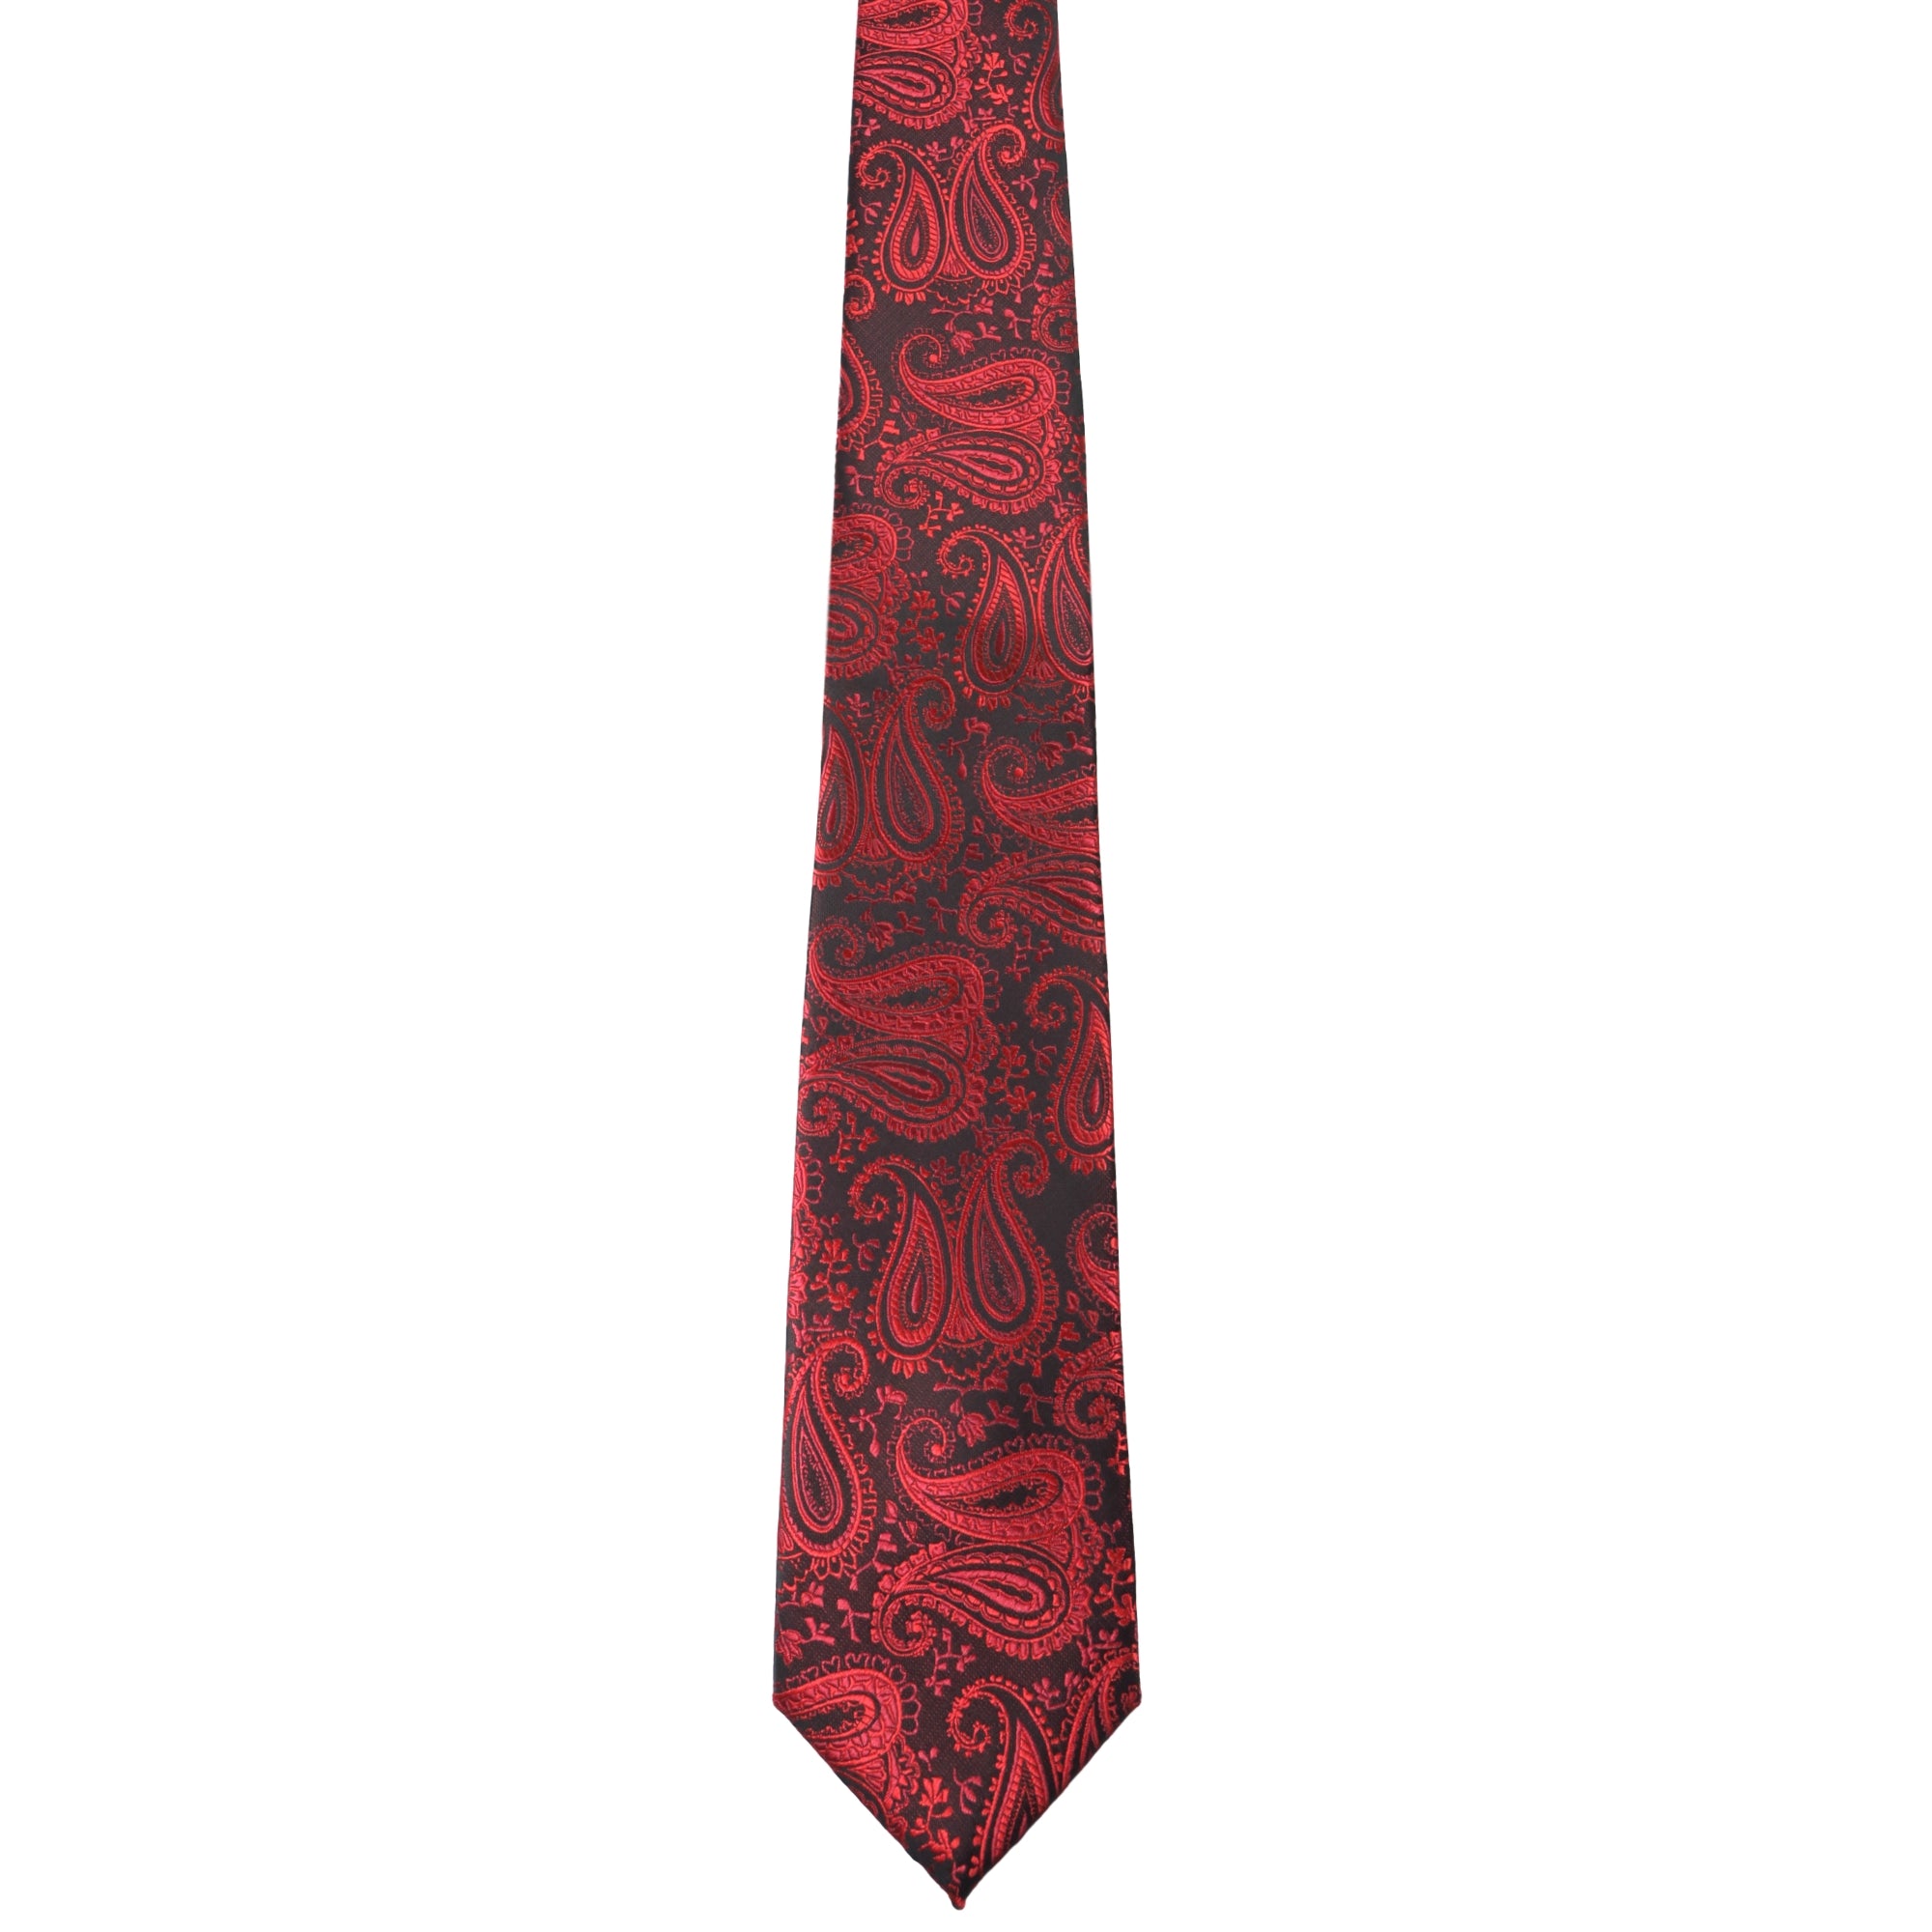 Kaufen Sie Bordeaux-Rote Paisley-Krawatte | Designt f. GASSANIshop.de -  GASSANI Krawatten